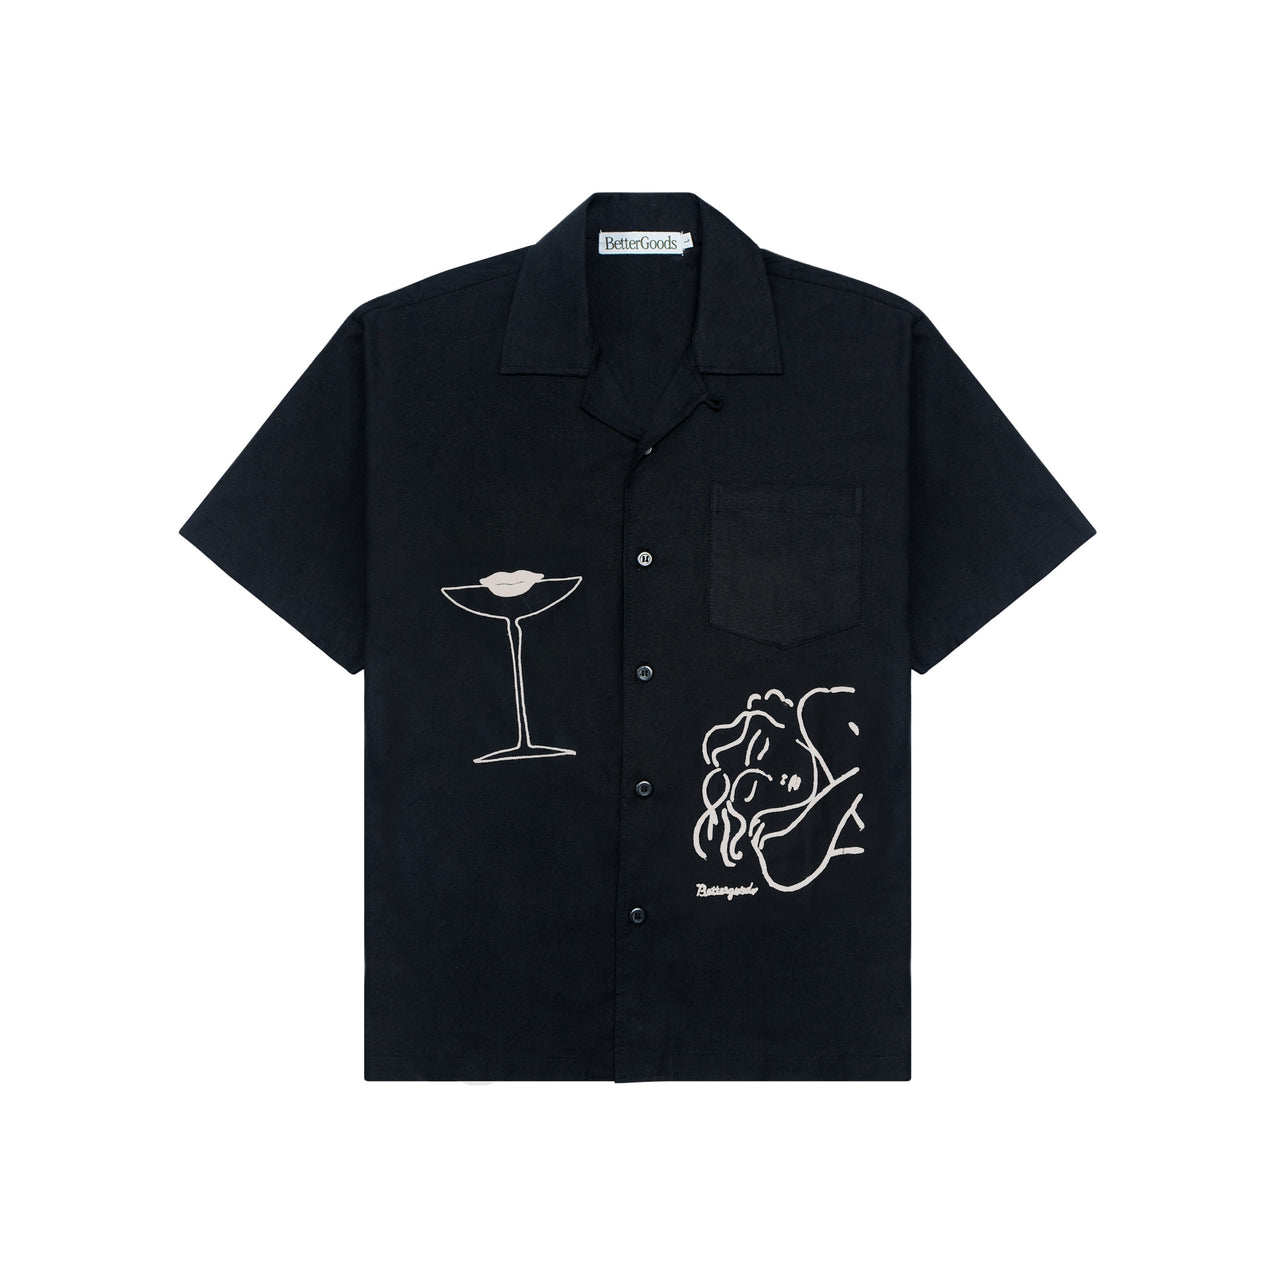 Better Goods - Cocktail Shirt Black